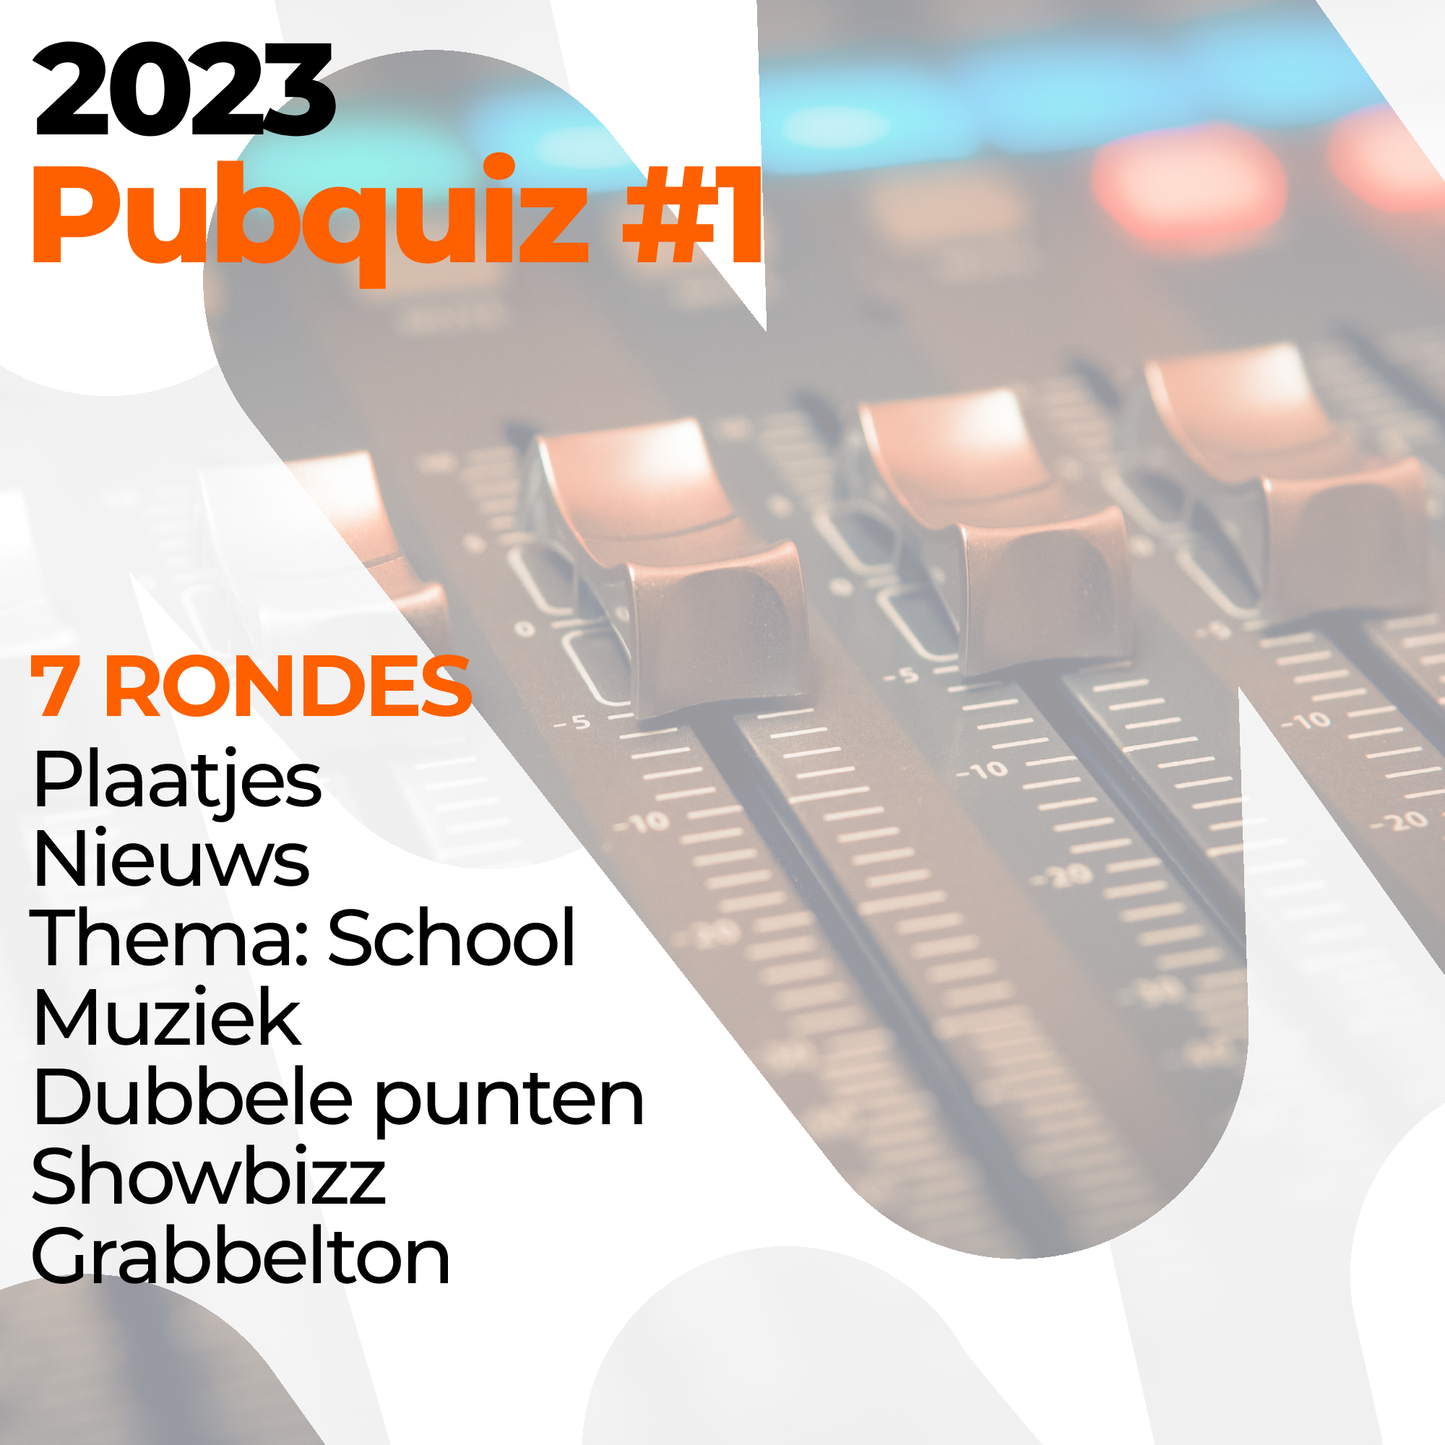 2023 pubquiz #1 | Nieuws, Thema School en nog 4 andere rondes. 70 vragen - 🥇  QuizKopen